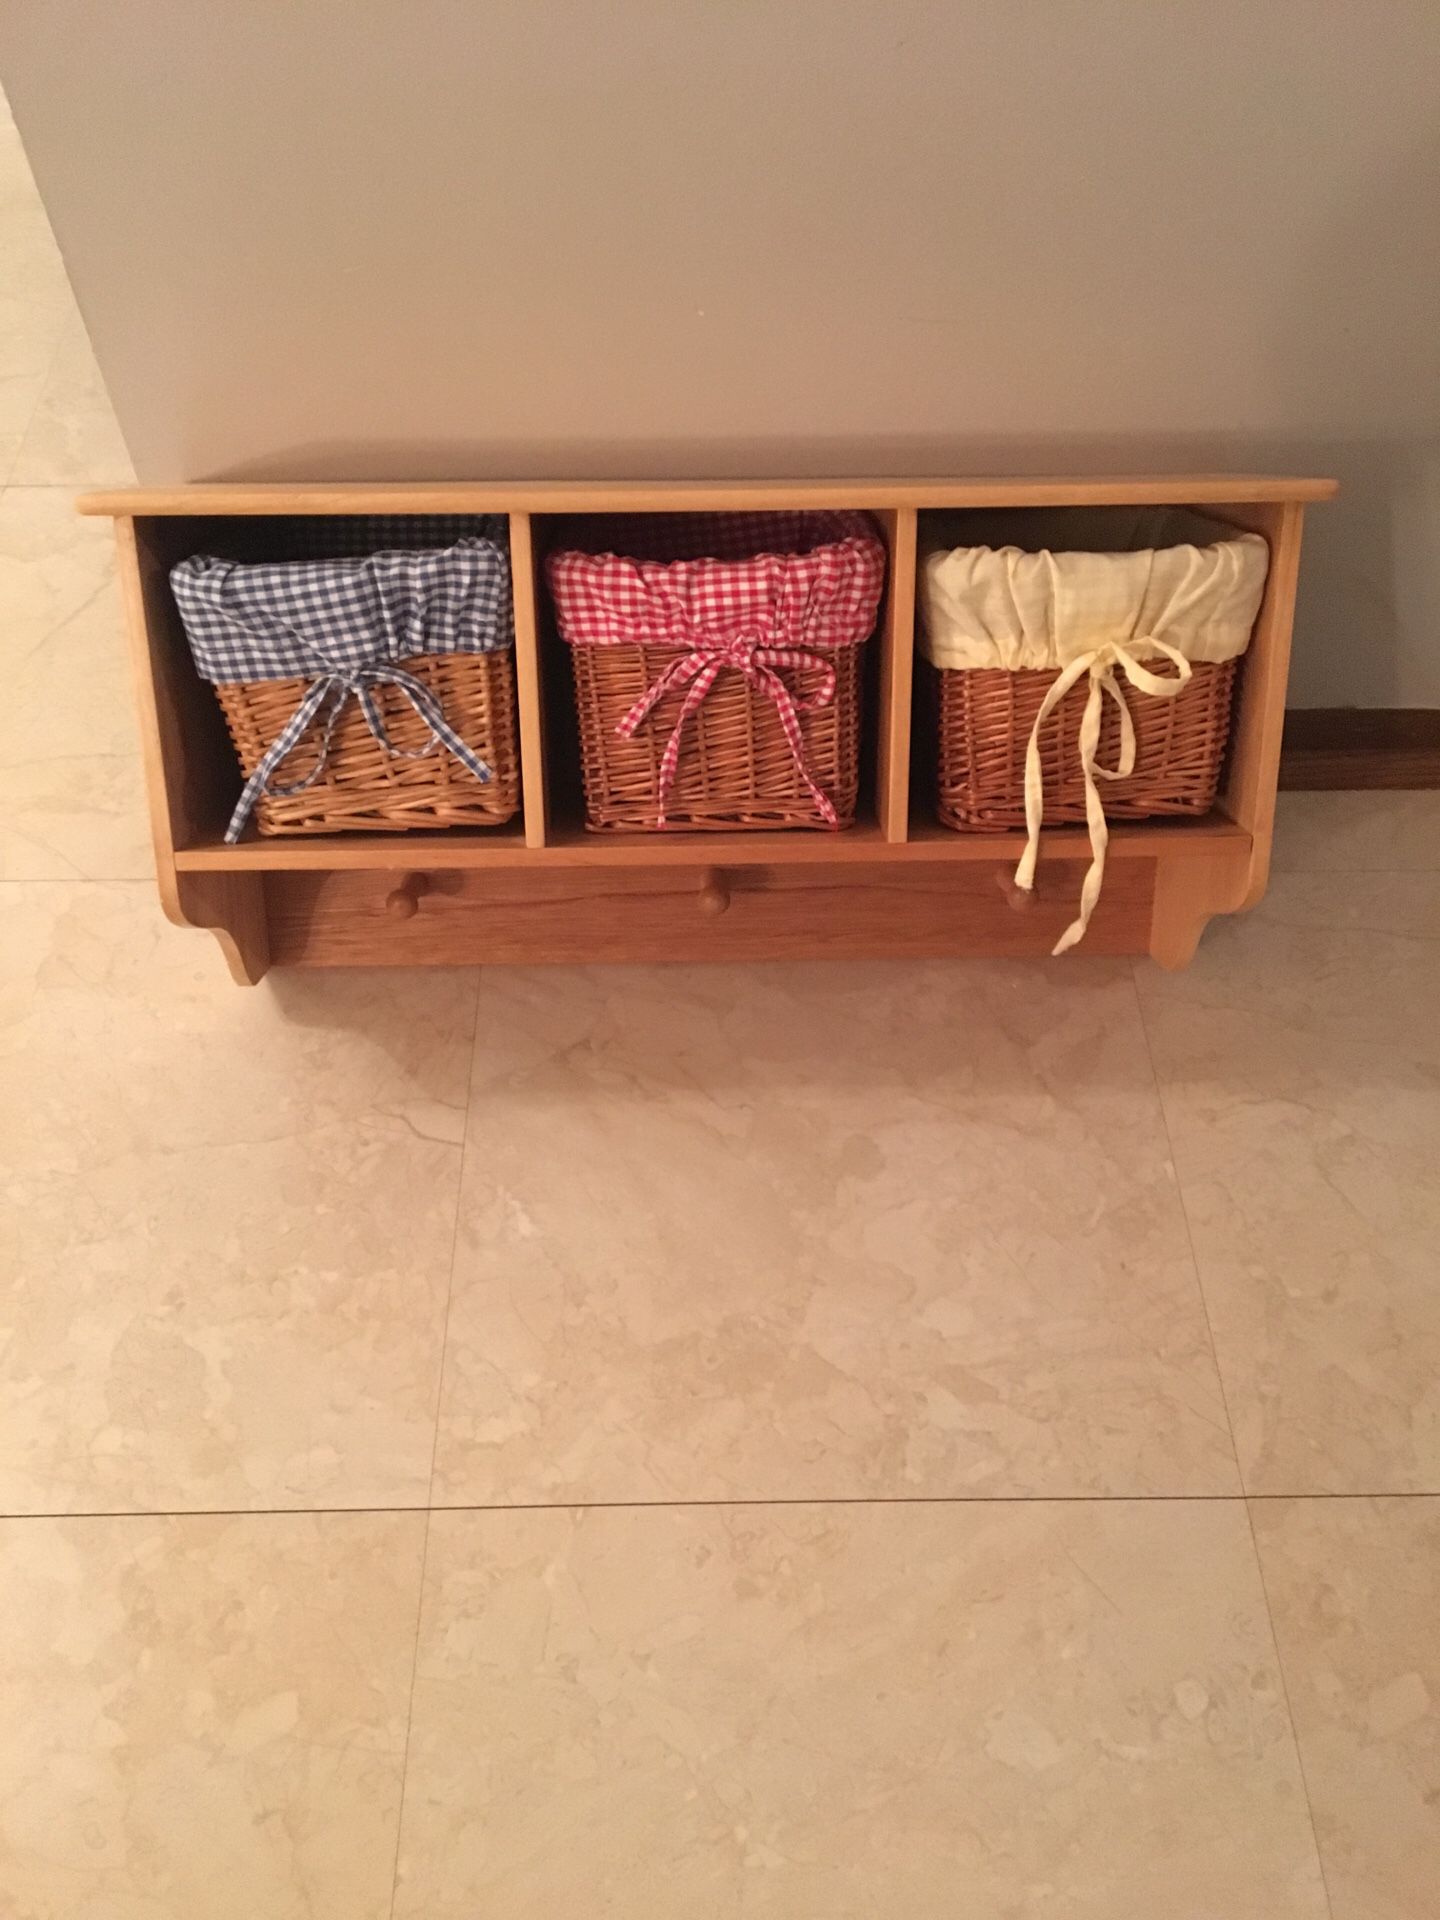 Small shelf with baskets